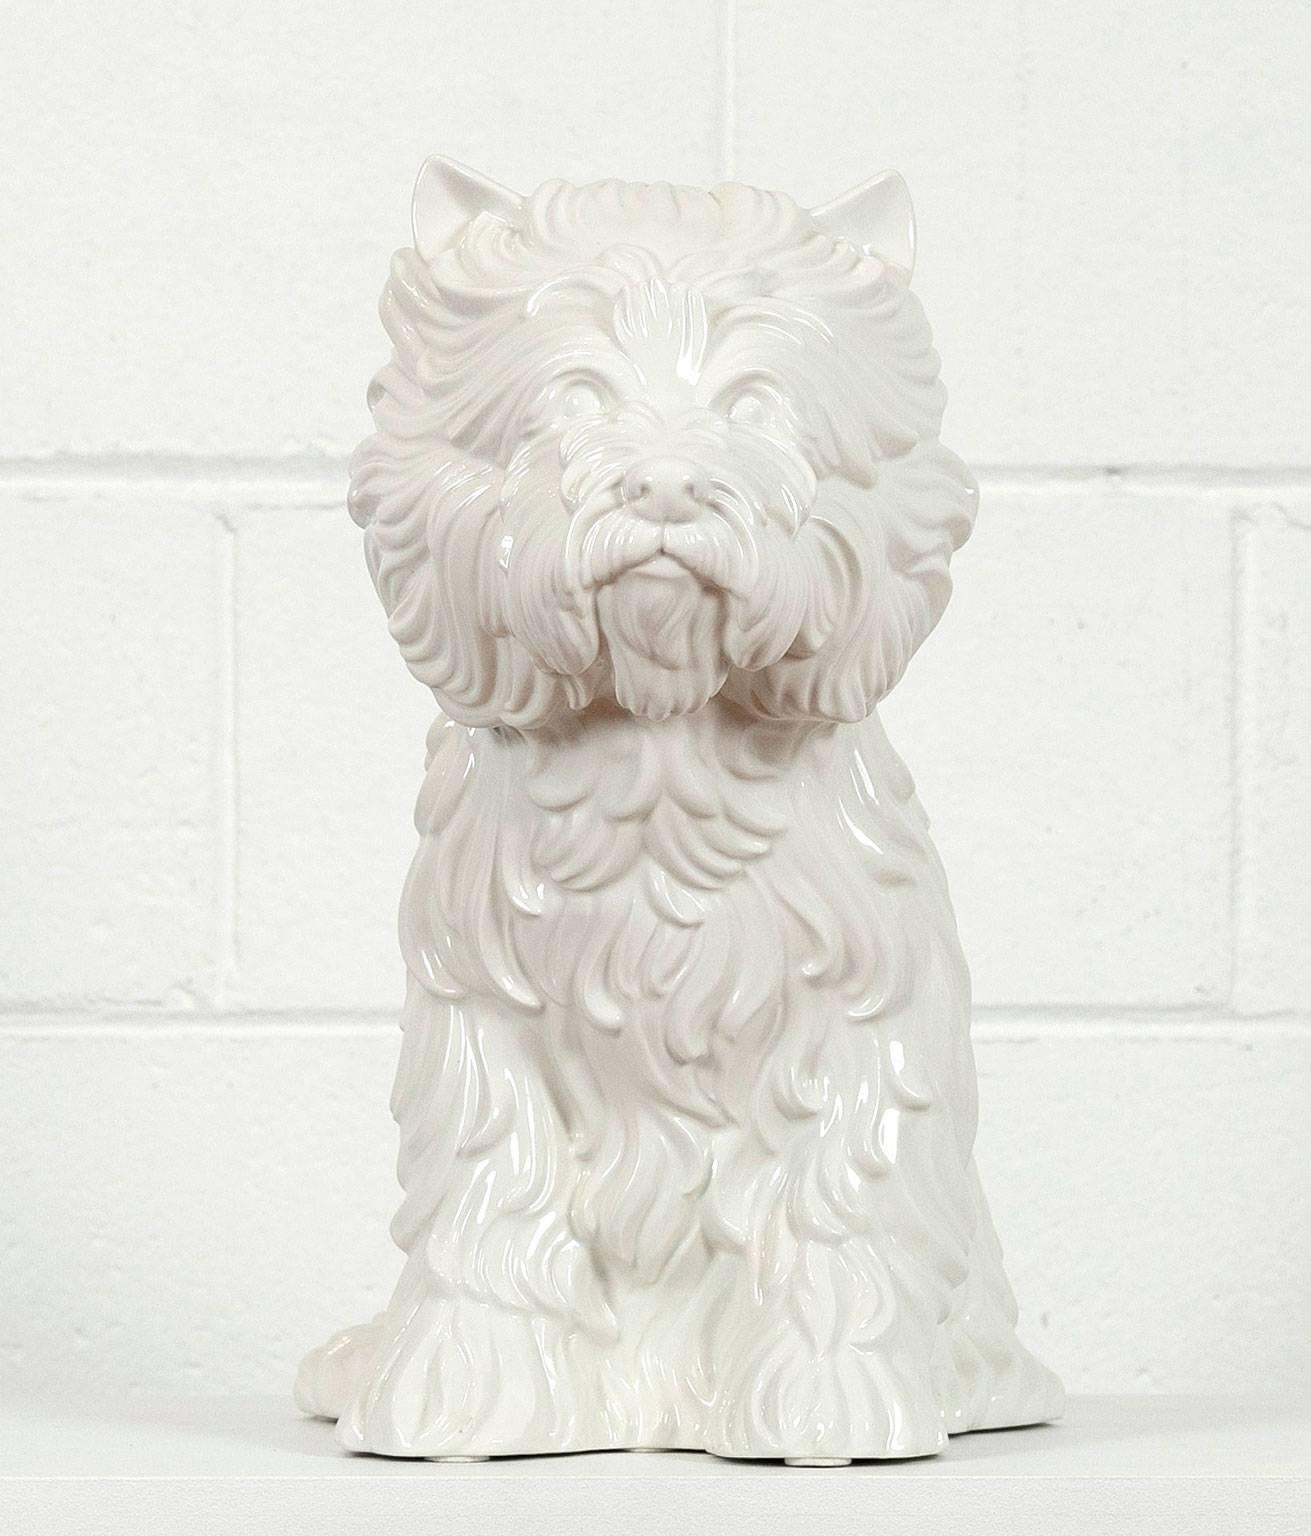 Jeff Koons Figurative Sculpture - "Puppy"